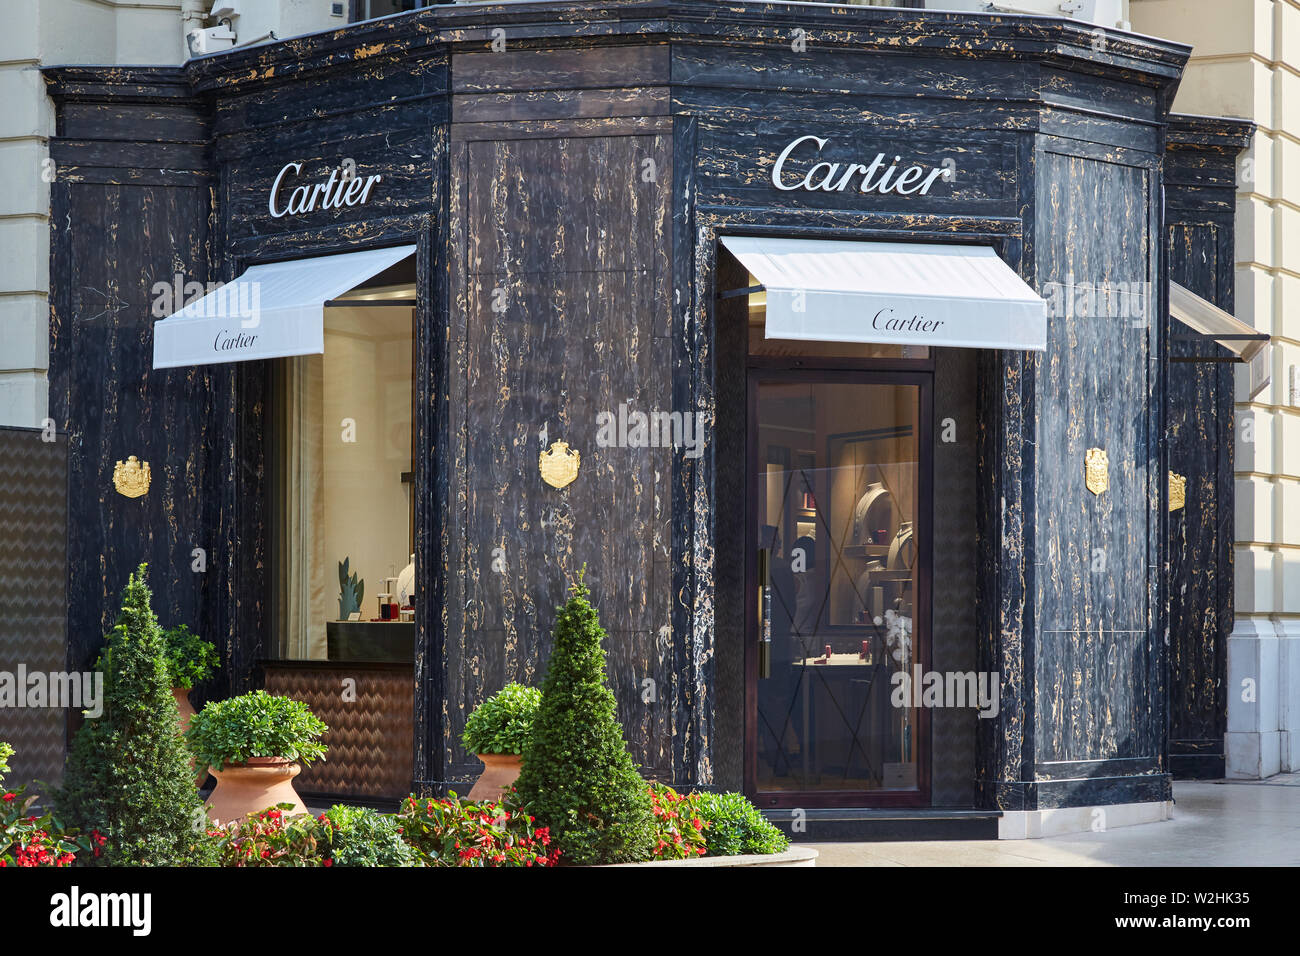 MONTE CARLO, MONACO - 19. AUGUST 2016: Cartier schmuck Luxus store mit schwarzem Marmor Fassade in Monte Carlo, Monaco. Stockfoto